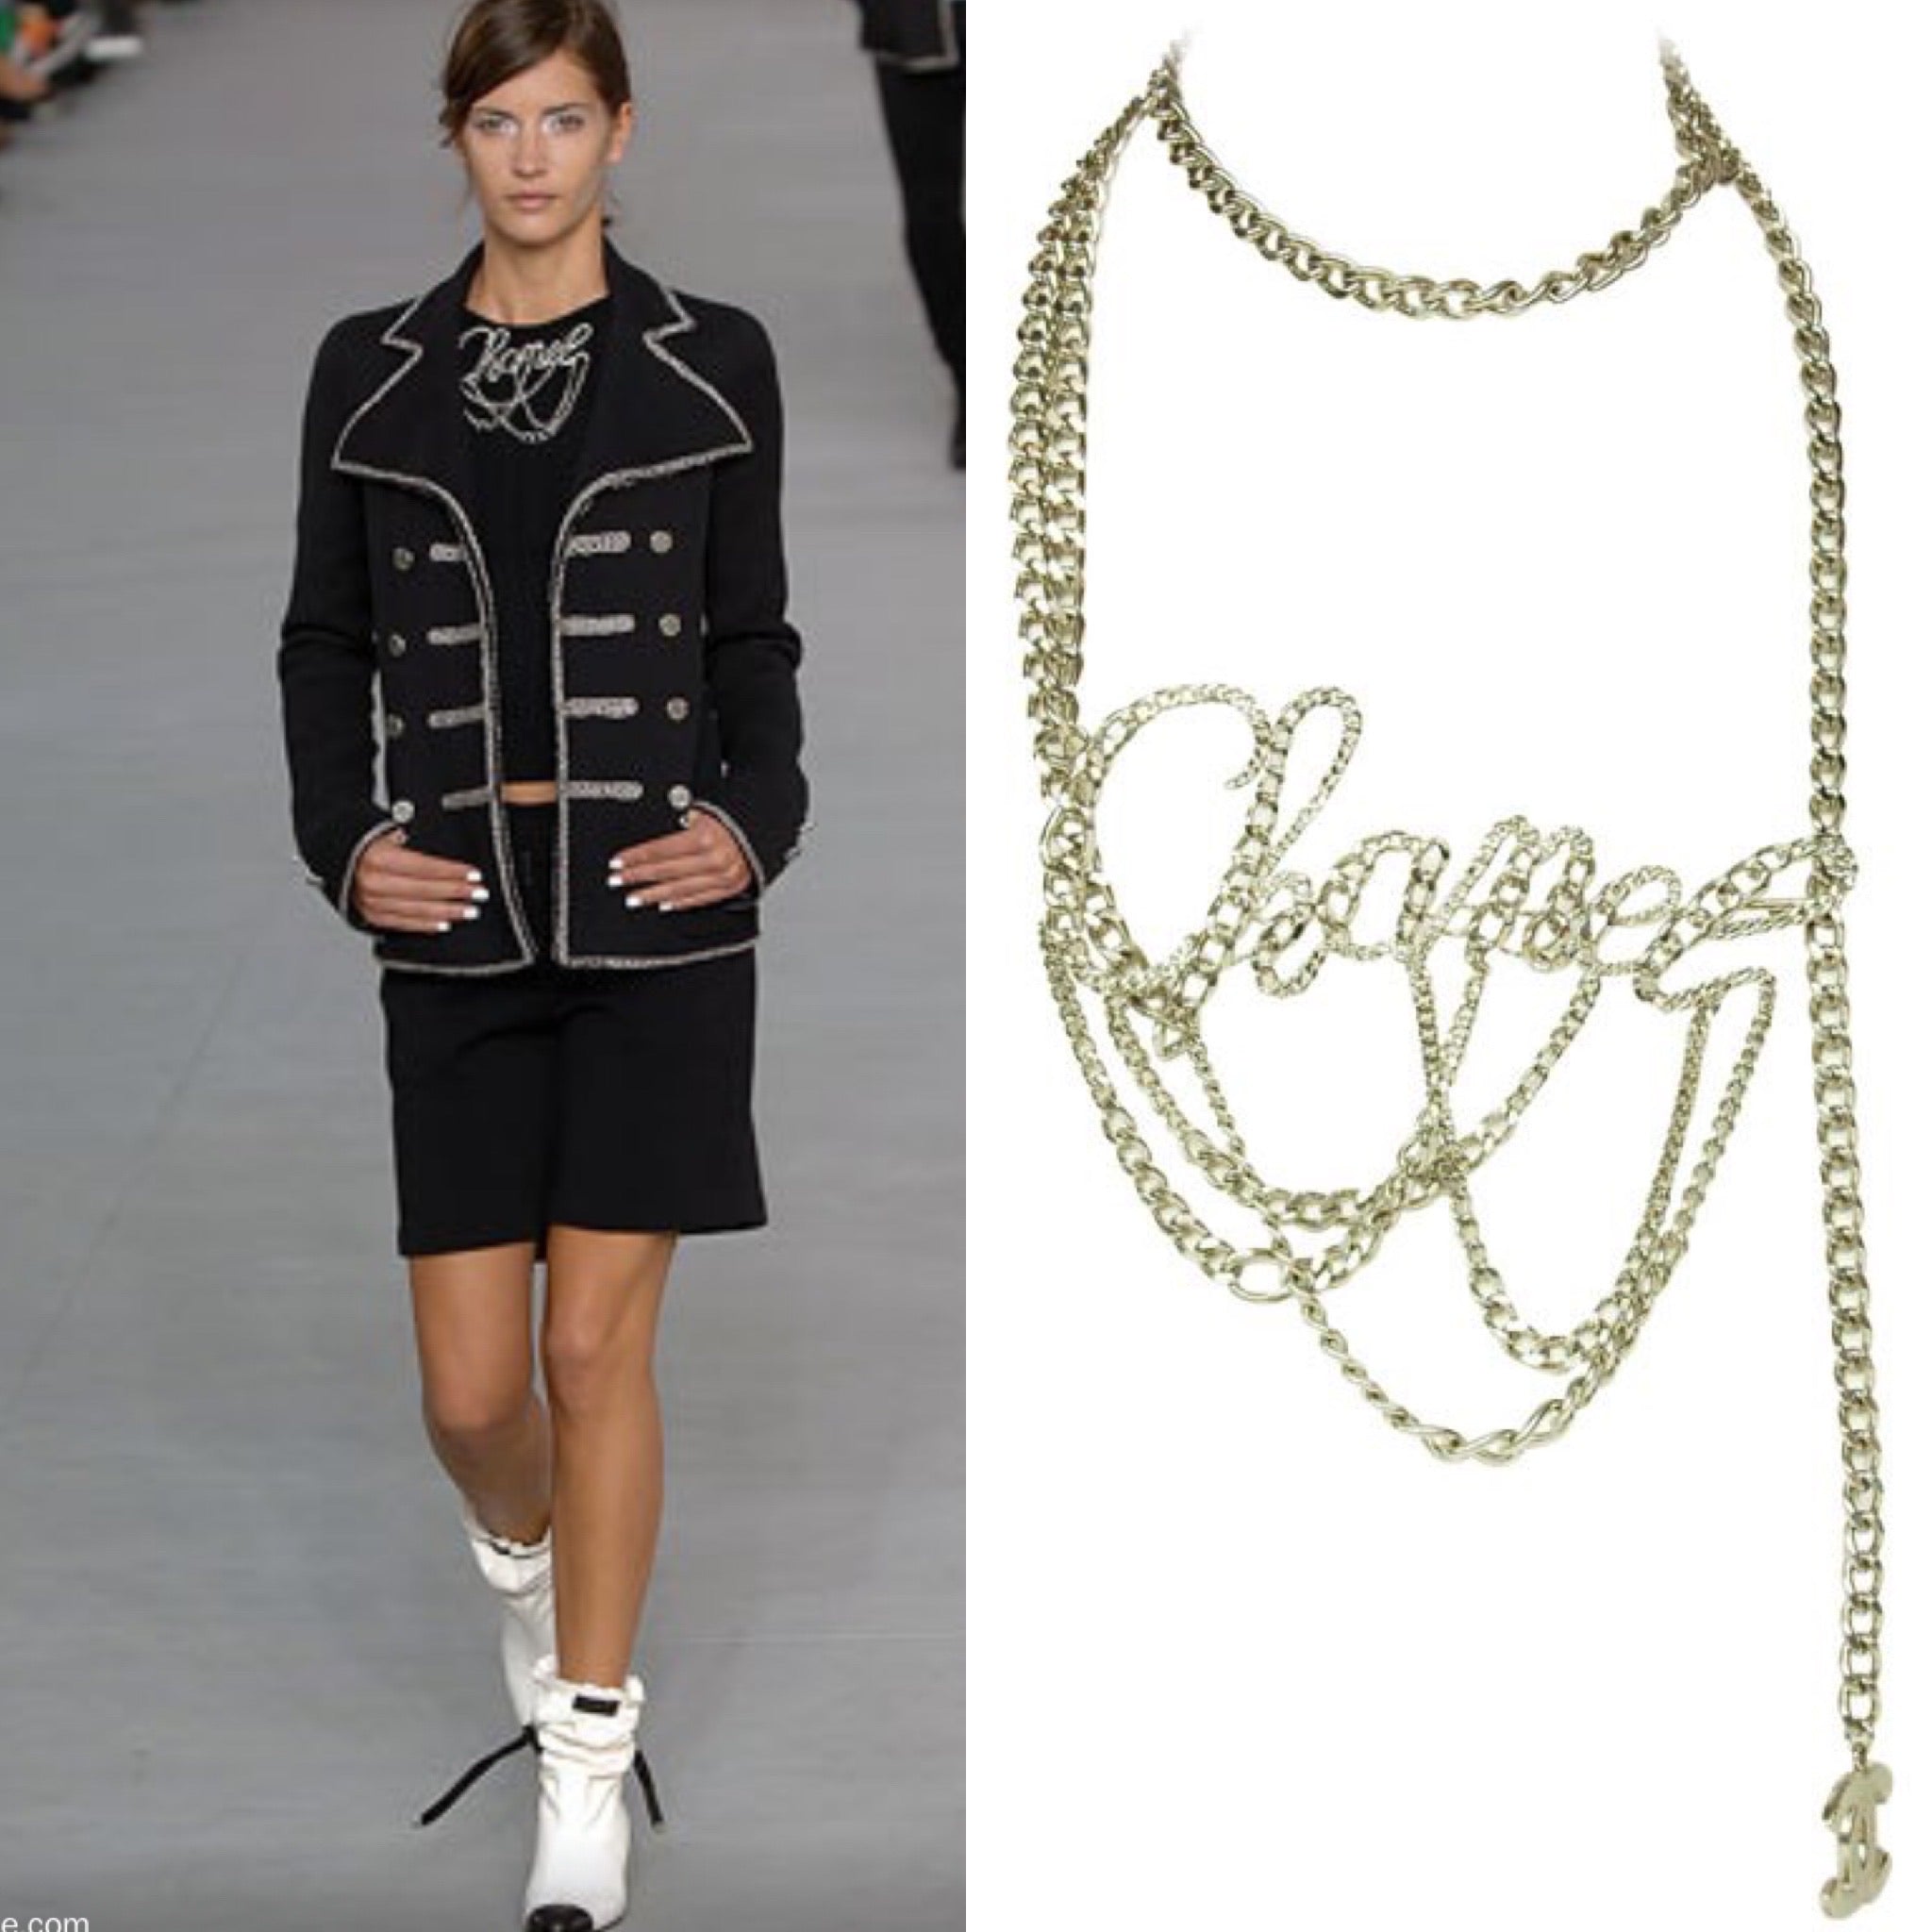 Chanel Chain Belt/Necklace